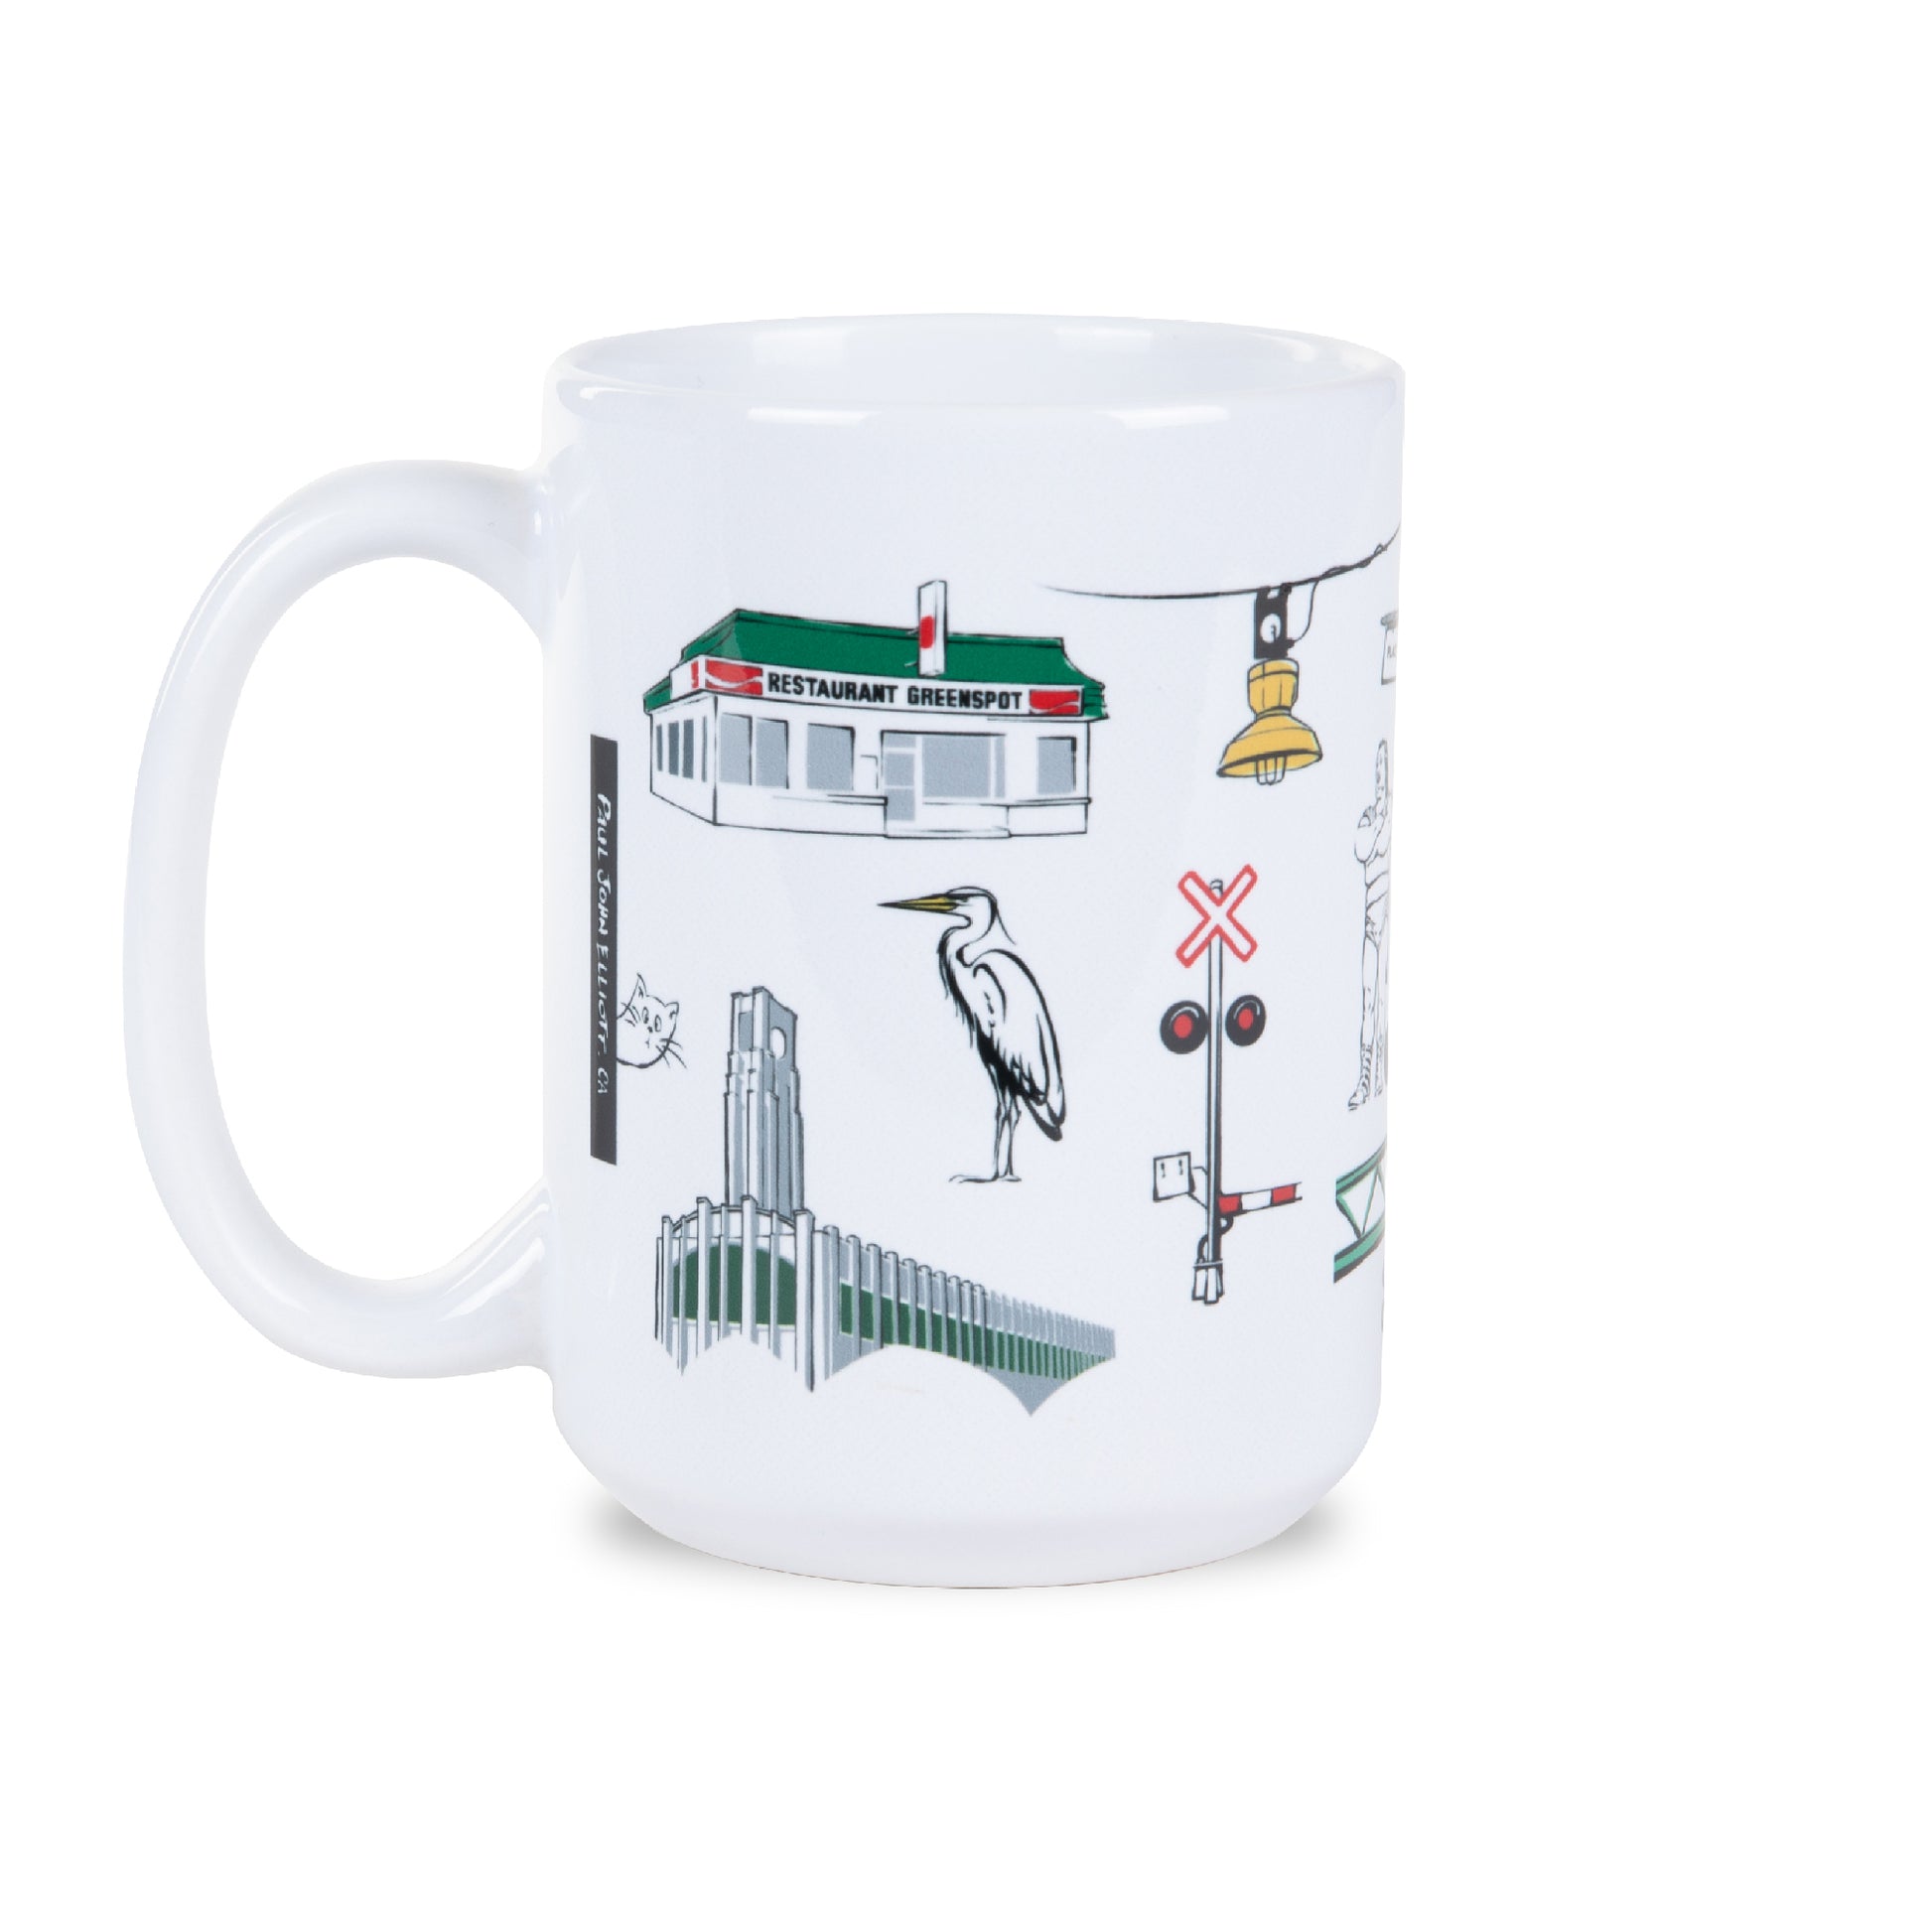 saint henri coffee mug, white ceramic, 15oz, illustrations, landmarks, icons, greenspot, atwater market, heron, railroad crossing, atwater lights, paul john elliott